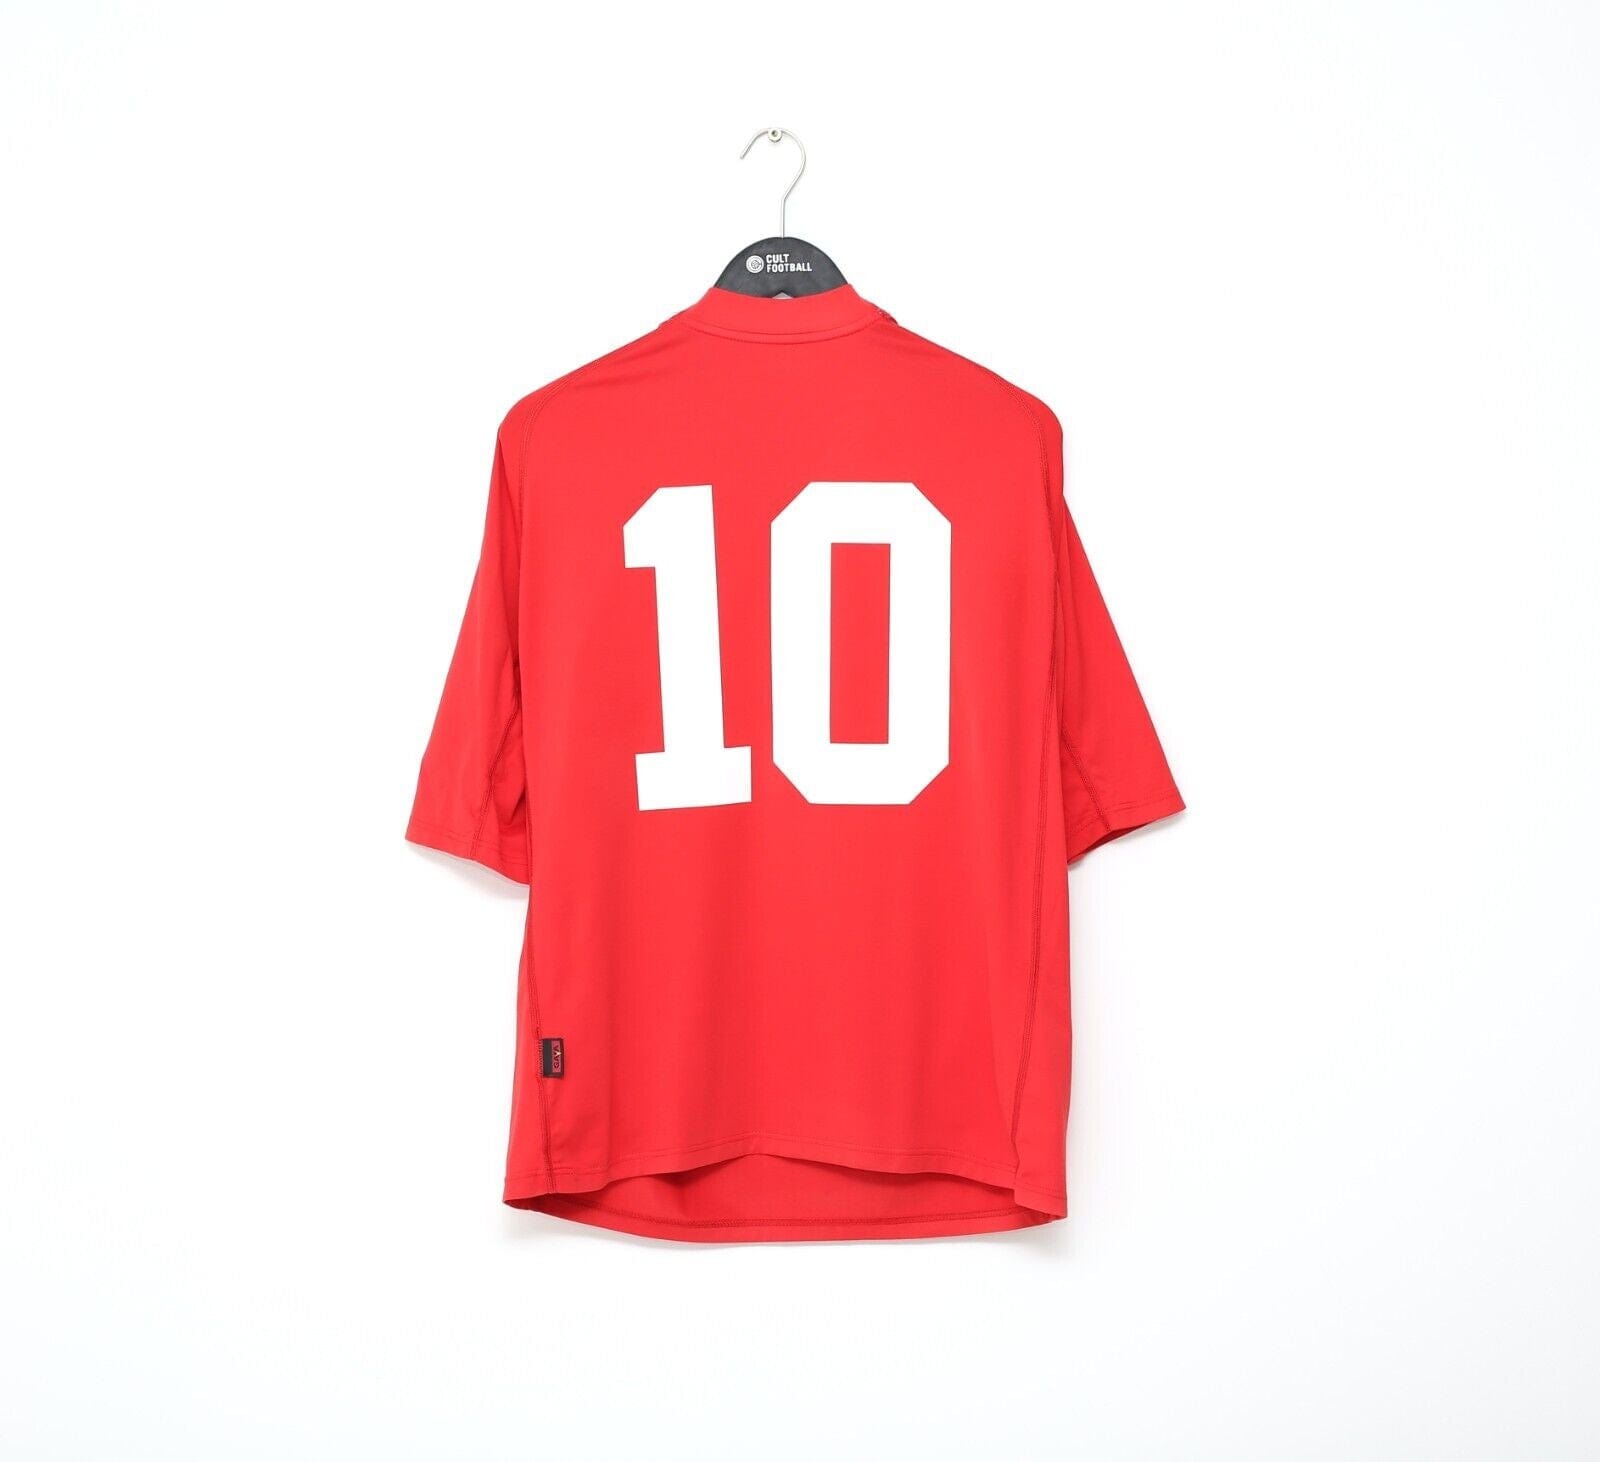 2000/01 SPEED #10 Wales Vintage KAPPA Home Football Shirt Jersey (M/L) MINT